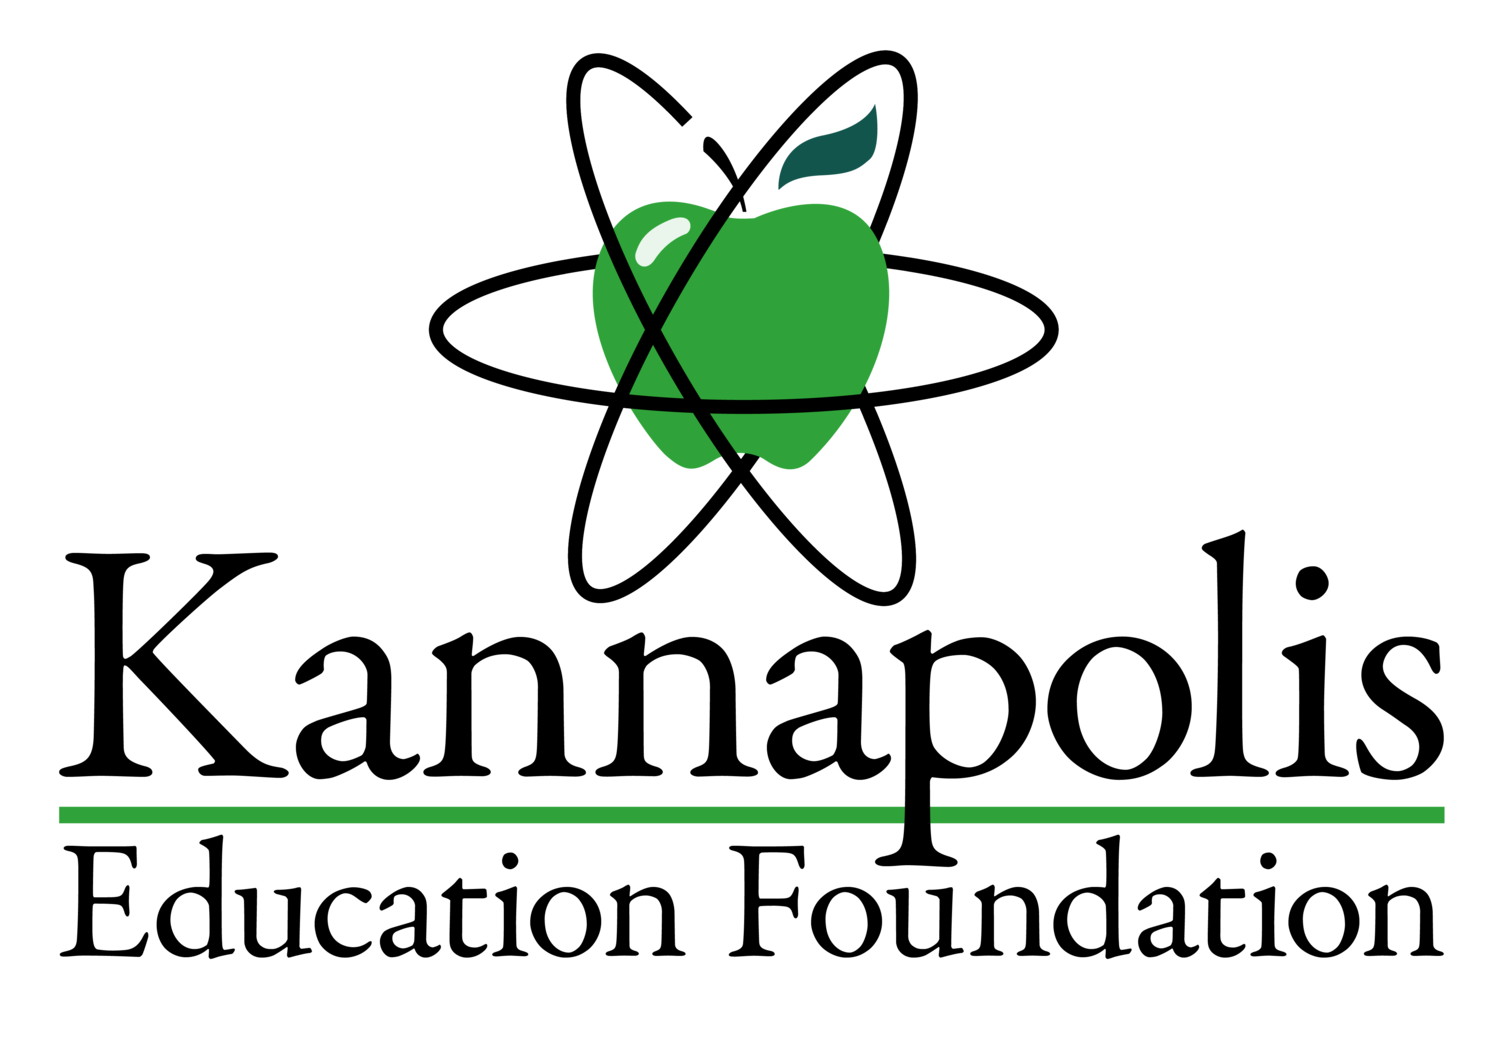 Kannapolis Education Foundation